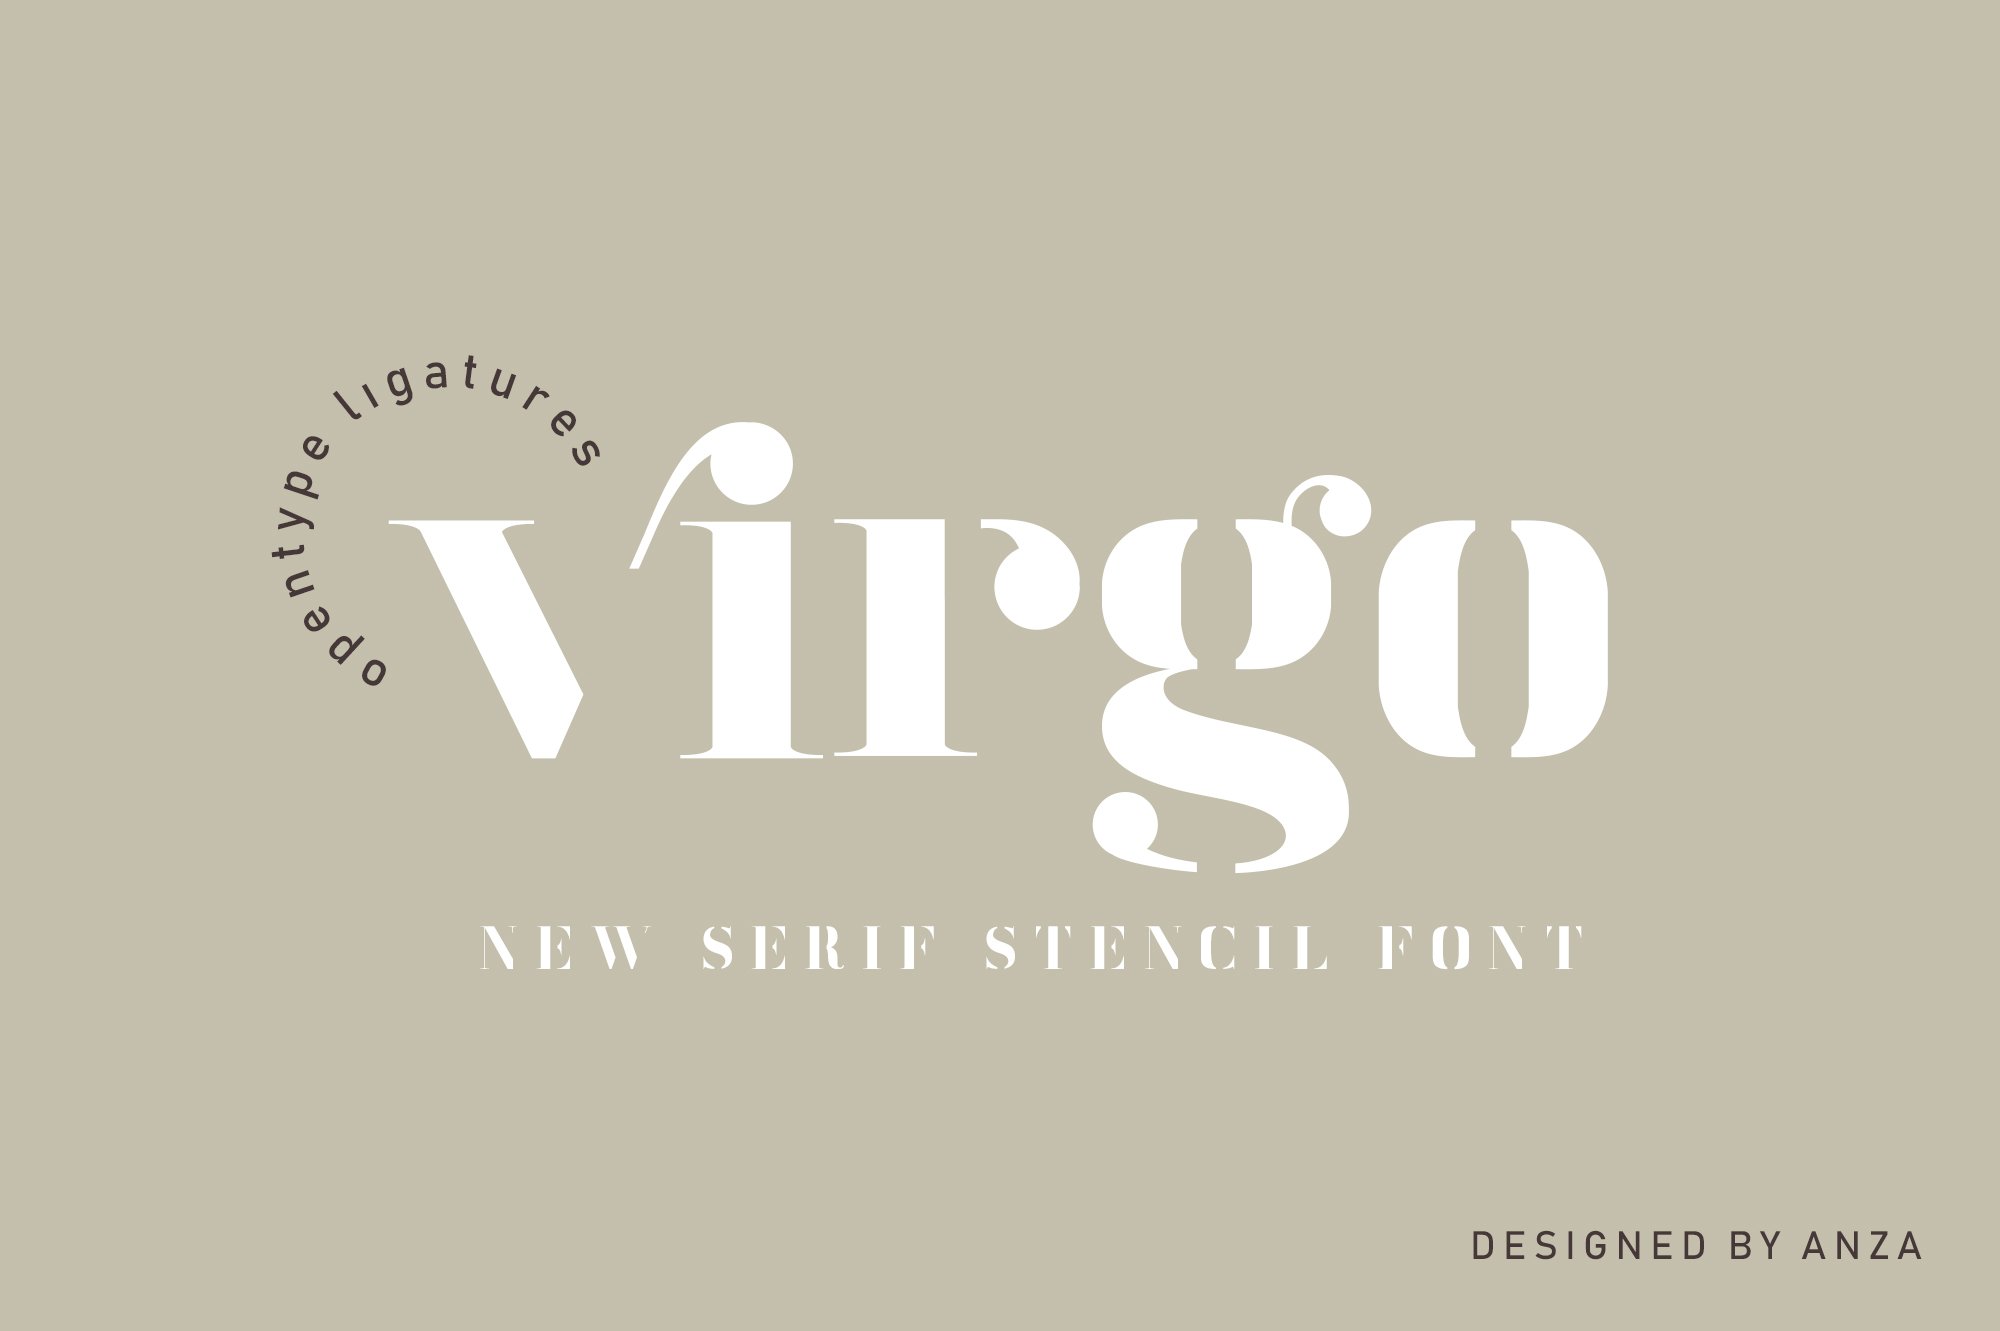 Virgo - New Serif Stencil Font cover image.